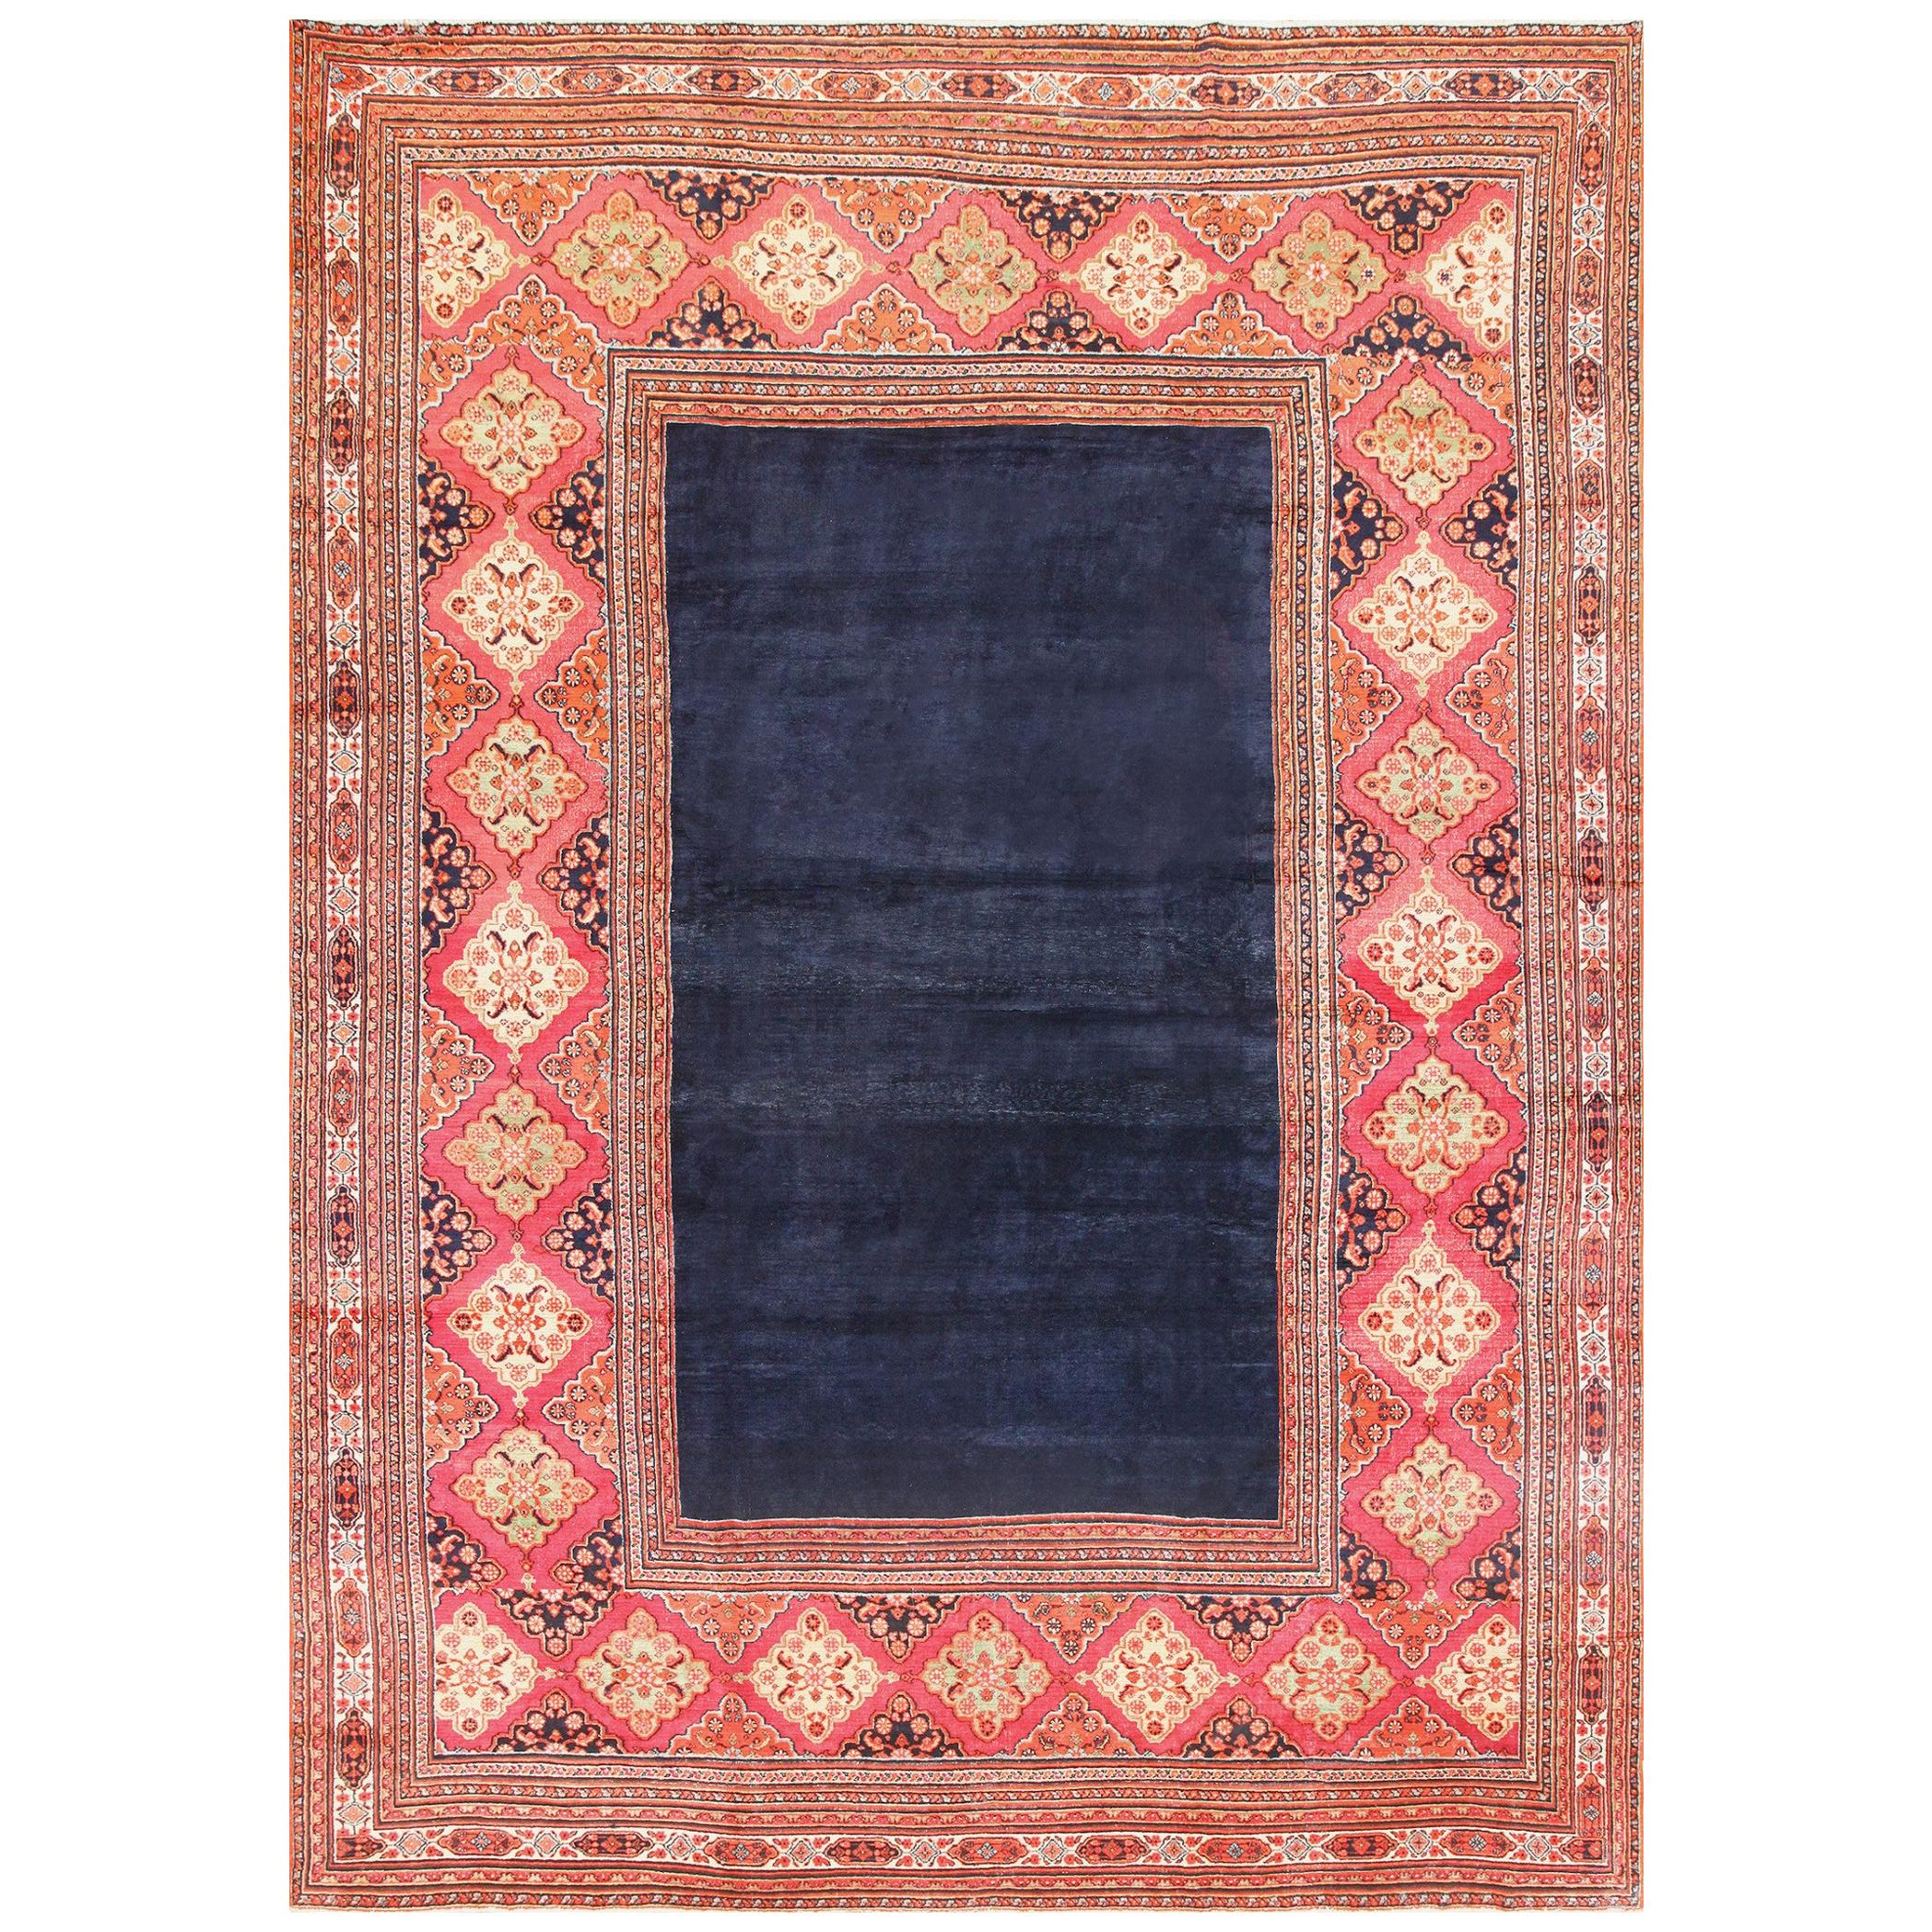 Nazmiyal Collection Antique Persian Khorassan Carpet. Size: 11' 9" x 16' 3"